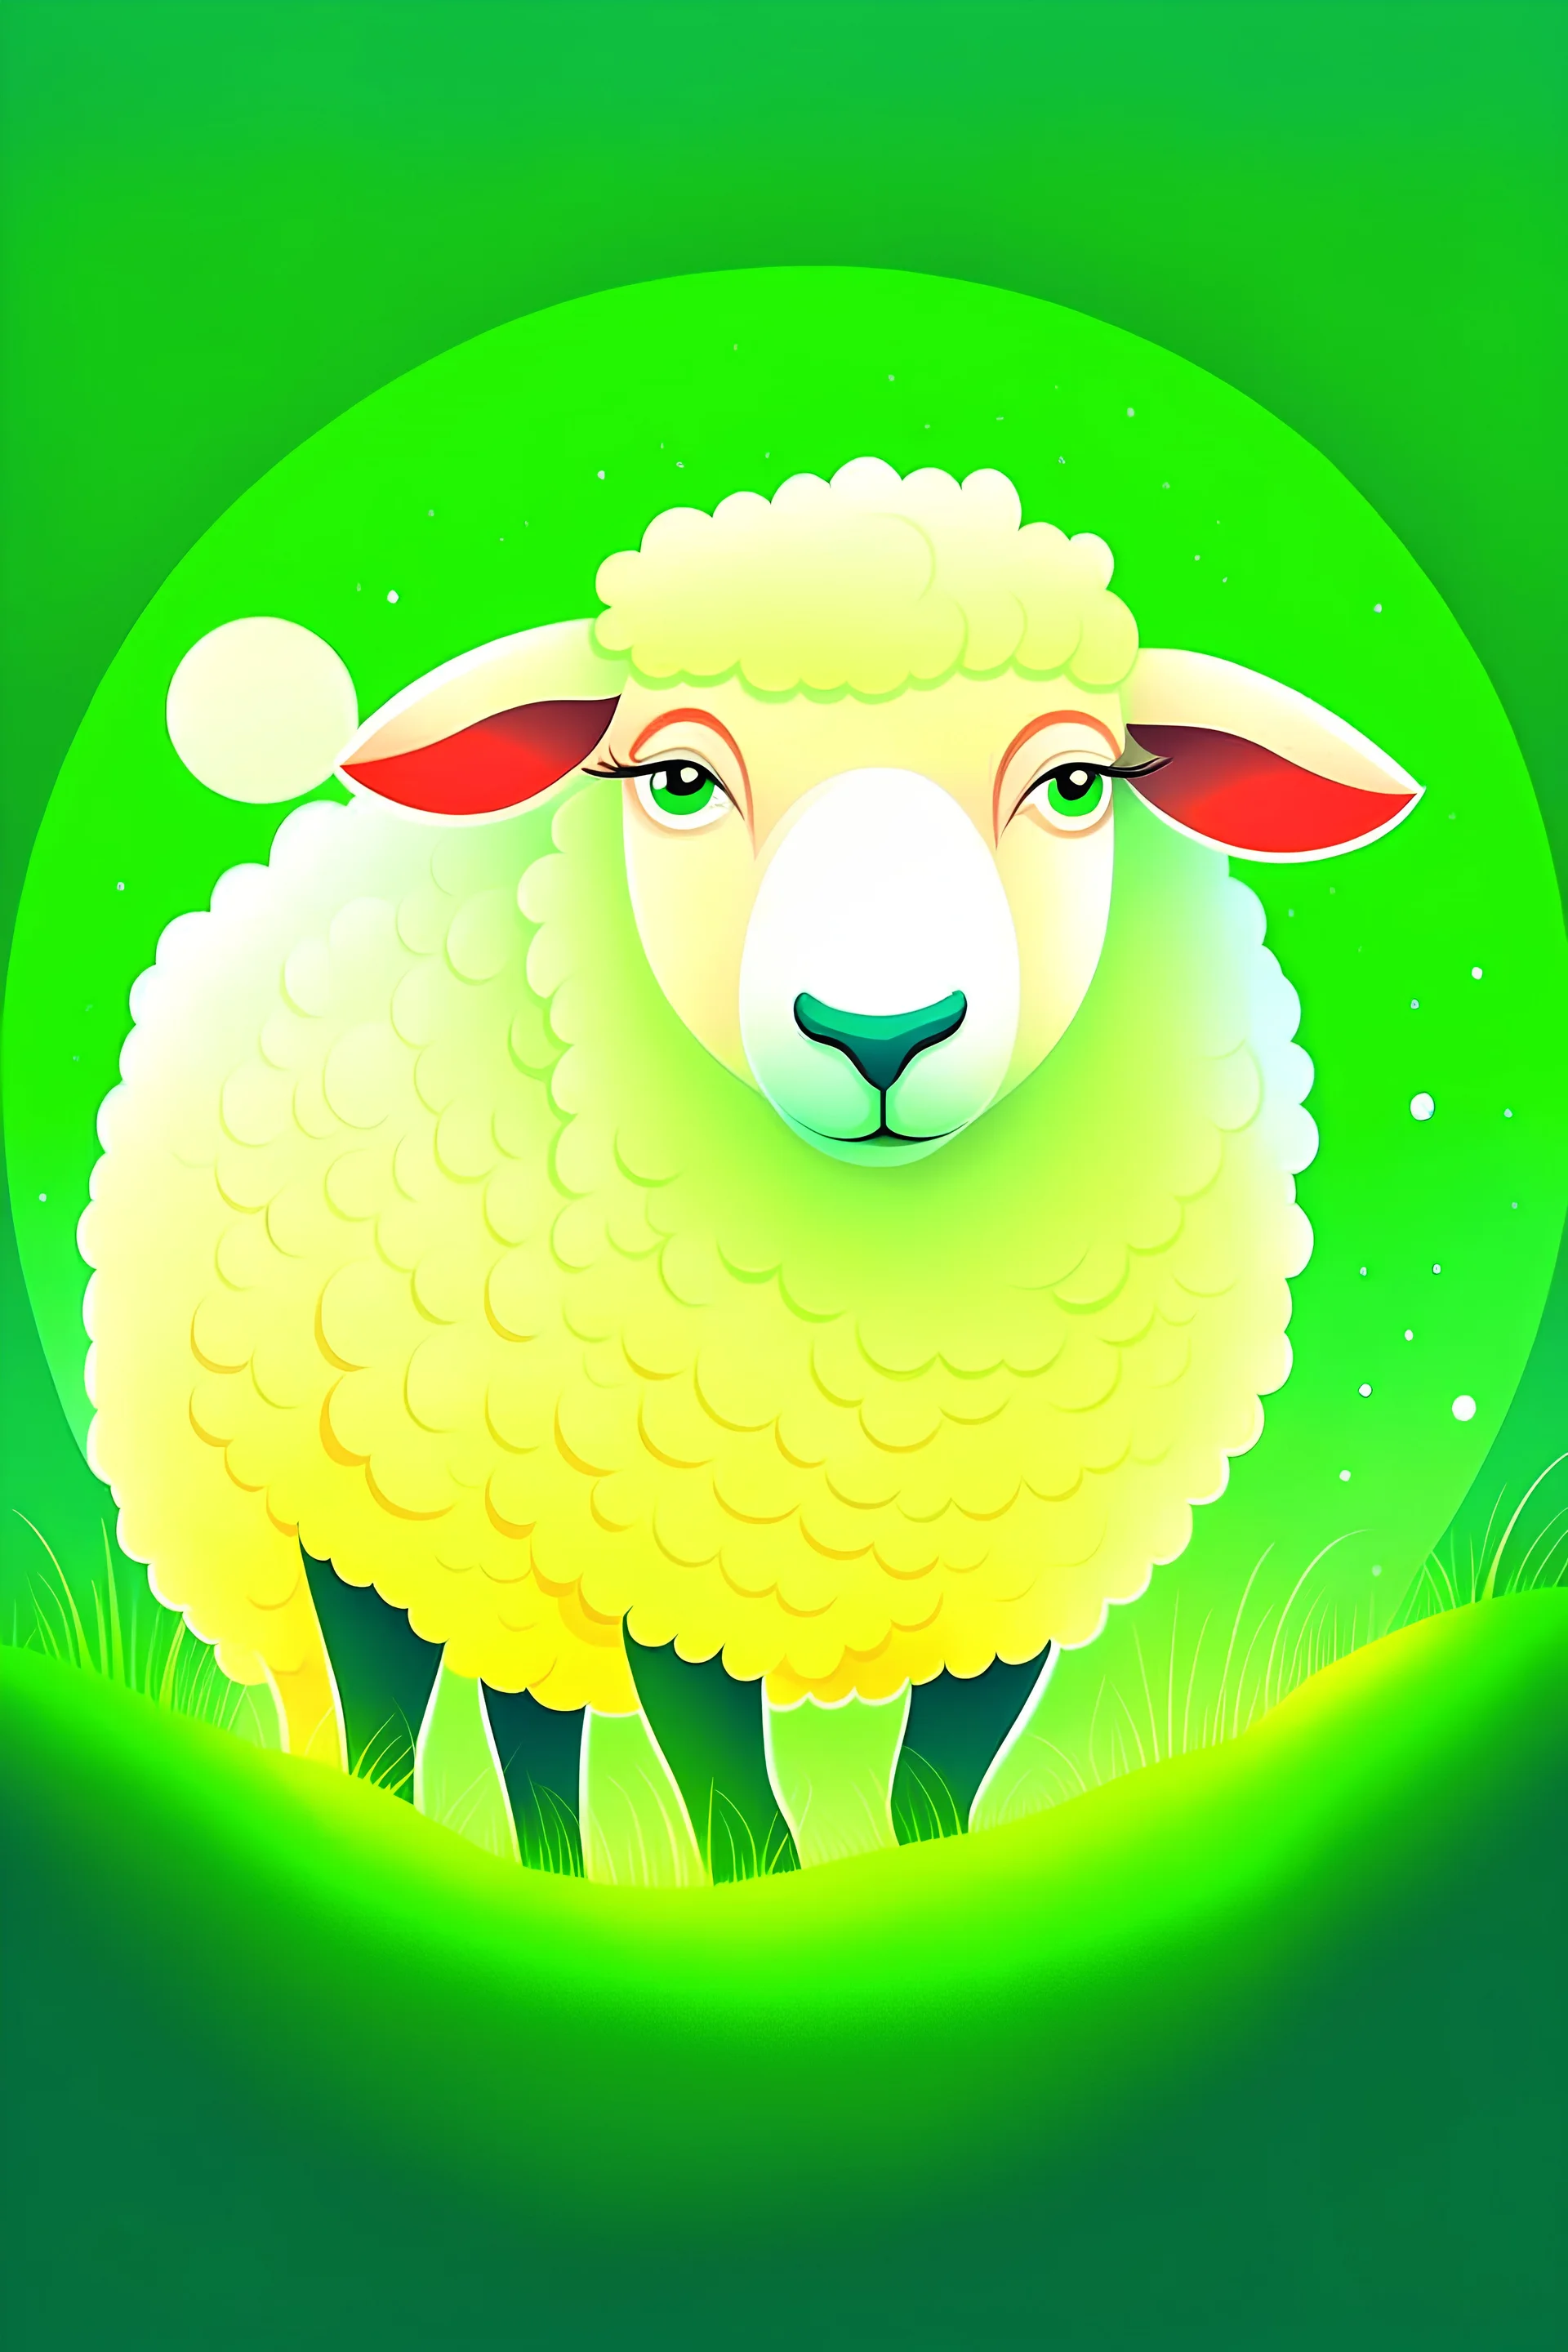 sheep for mobile application splash screen